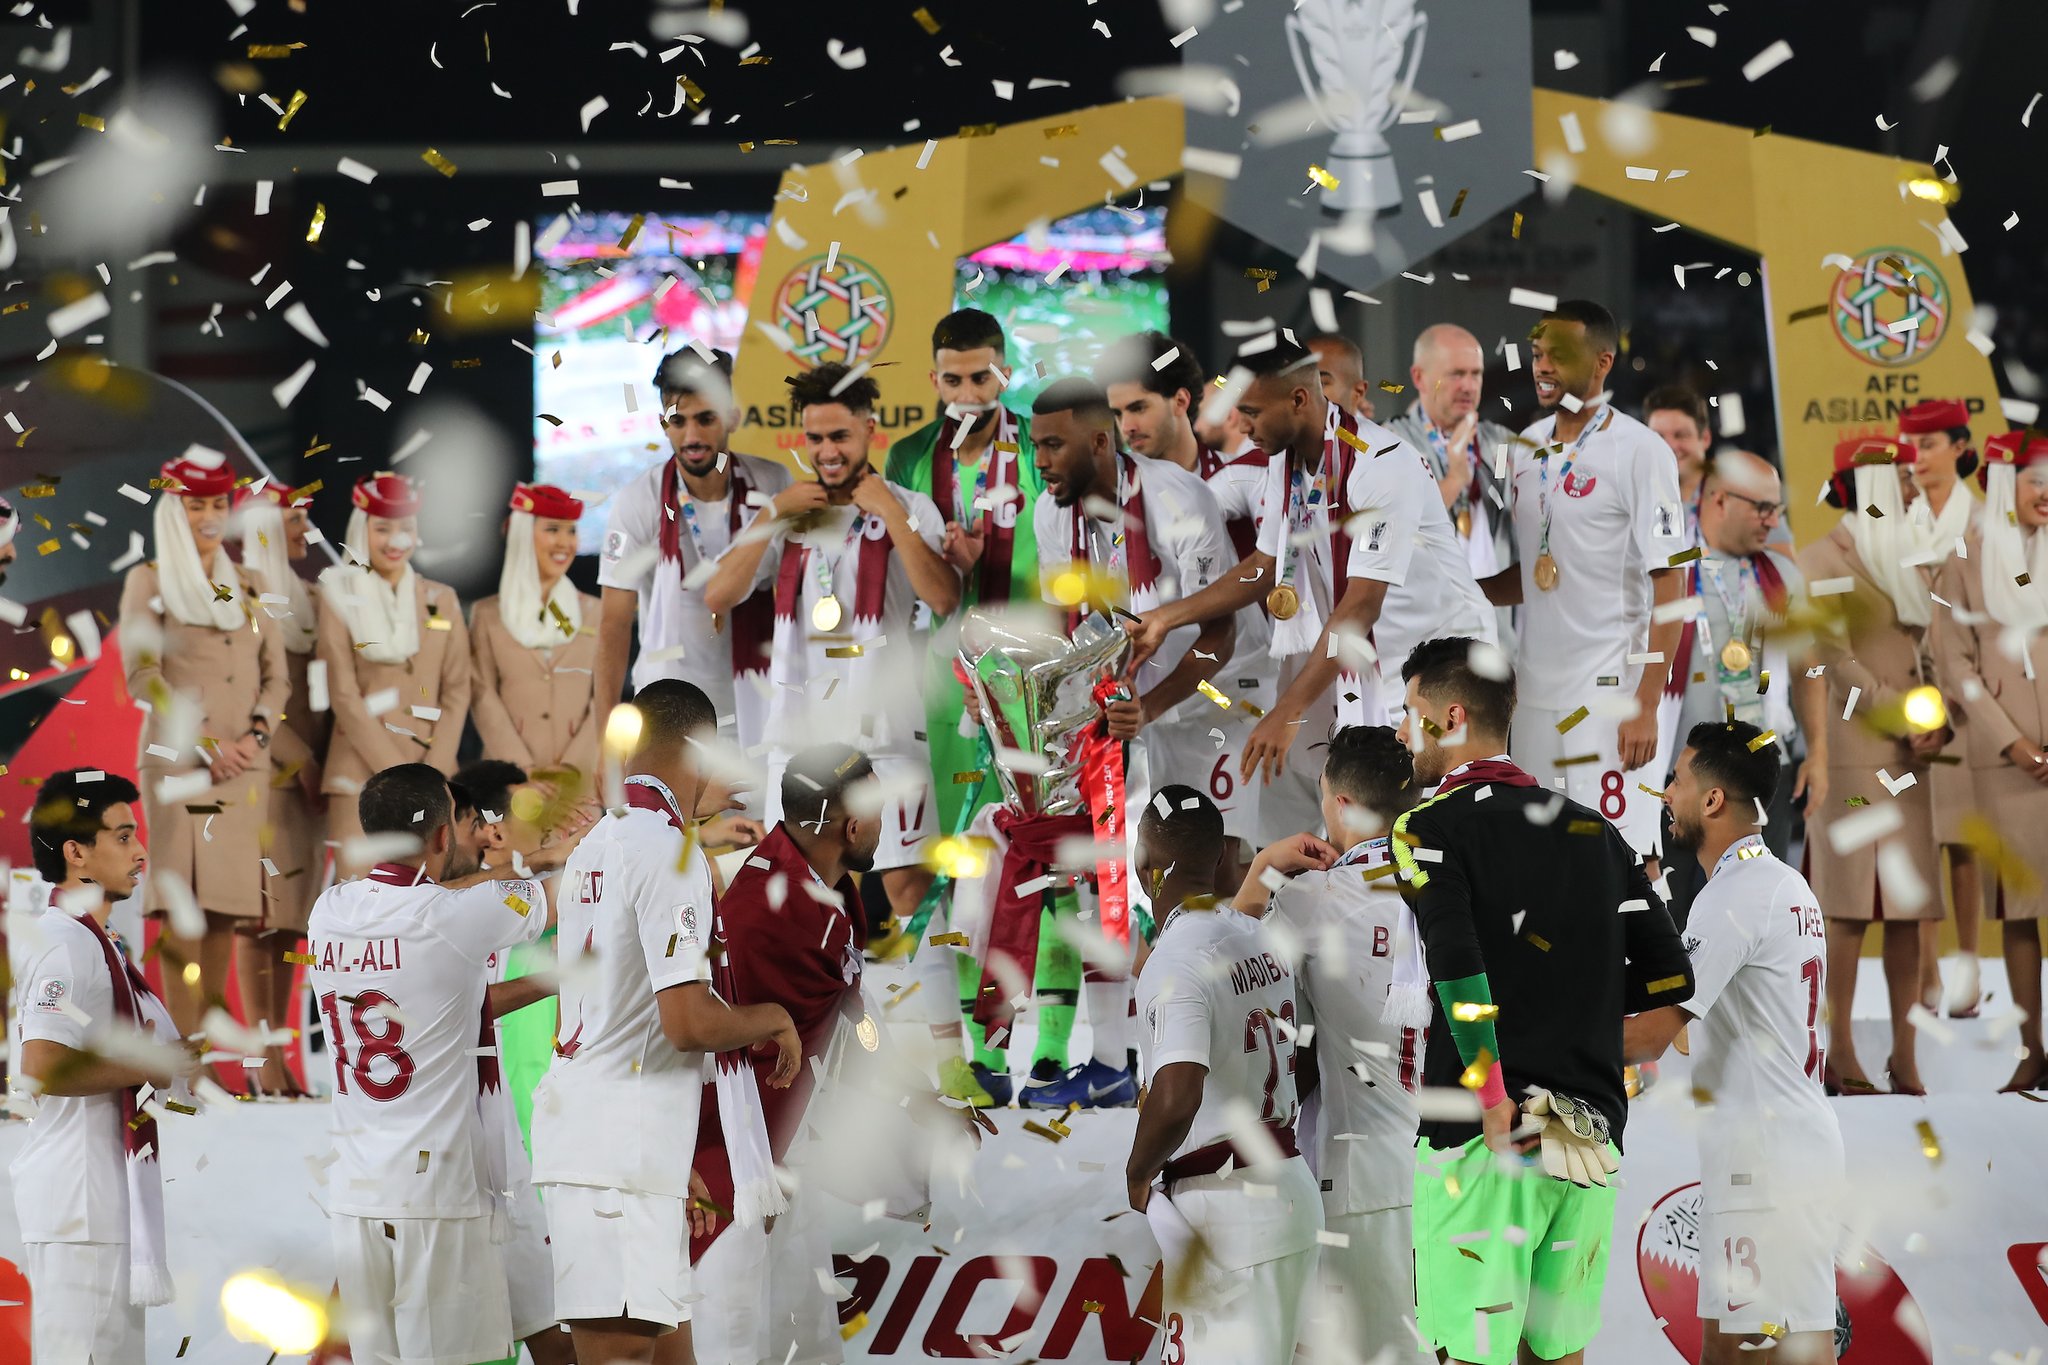 Timnas Qatar tampil sebagai juara Piala Asia 2019 setelah menundukkan Jepang 3-1 di final, Jumat 1 Februari 2019 di Zayed Sport City Stadium, UEA. (Foto: Twitter/@AsianCup2019)